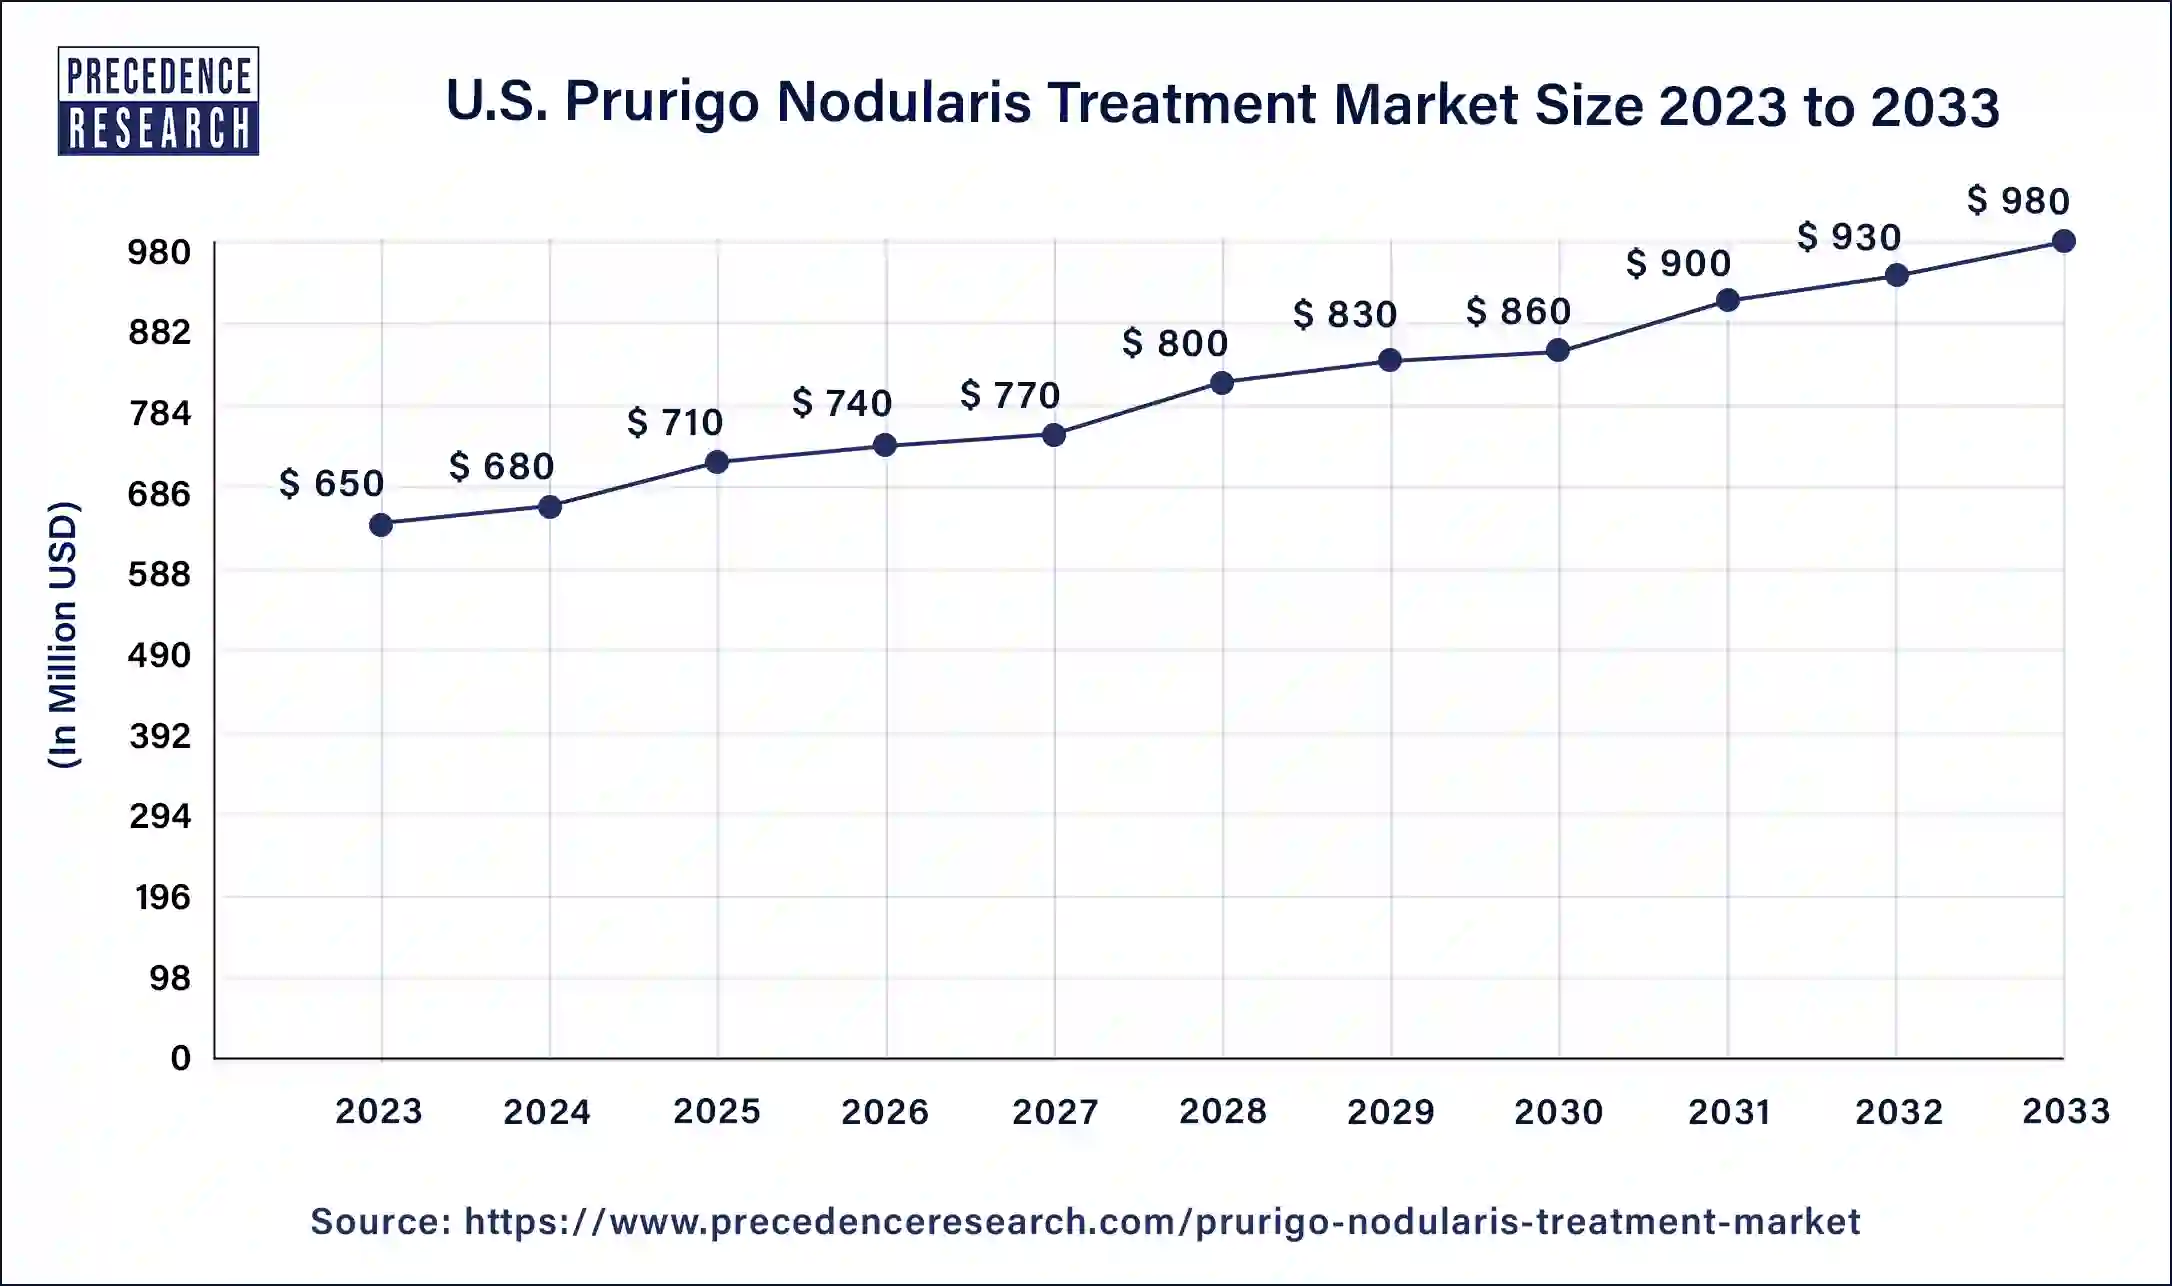 U.S. Prurigo Nodularis Treatment Market Size 2024 to 2033